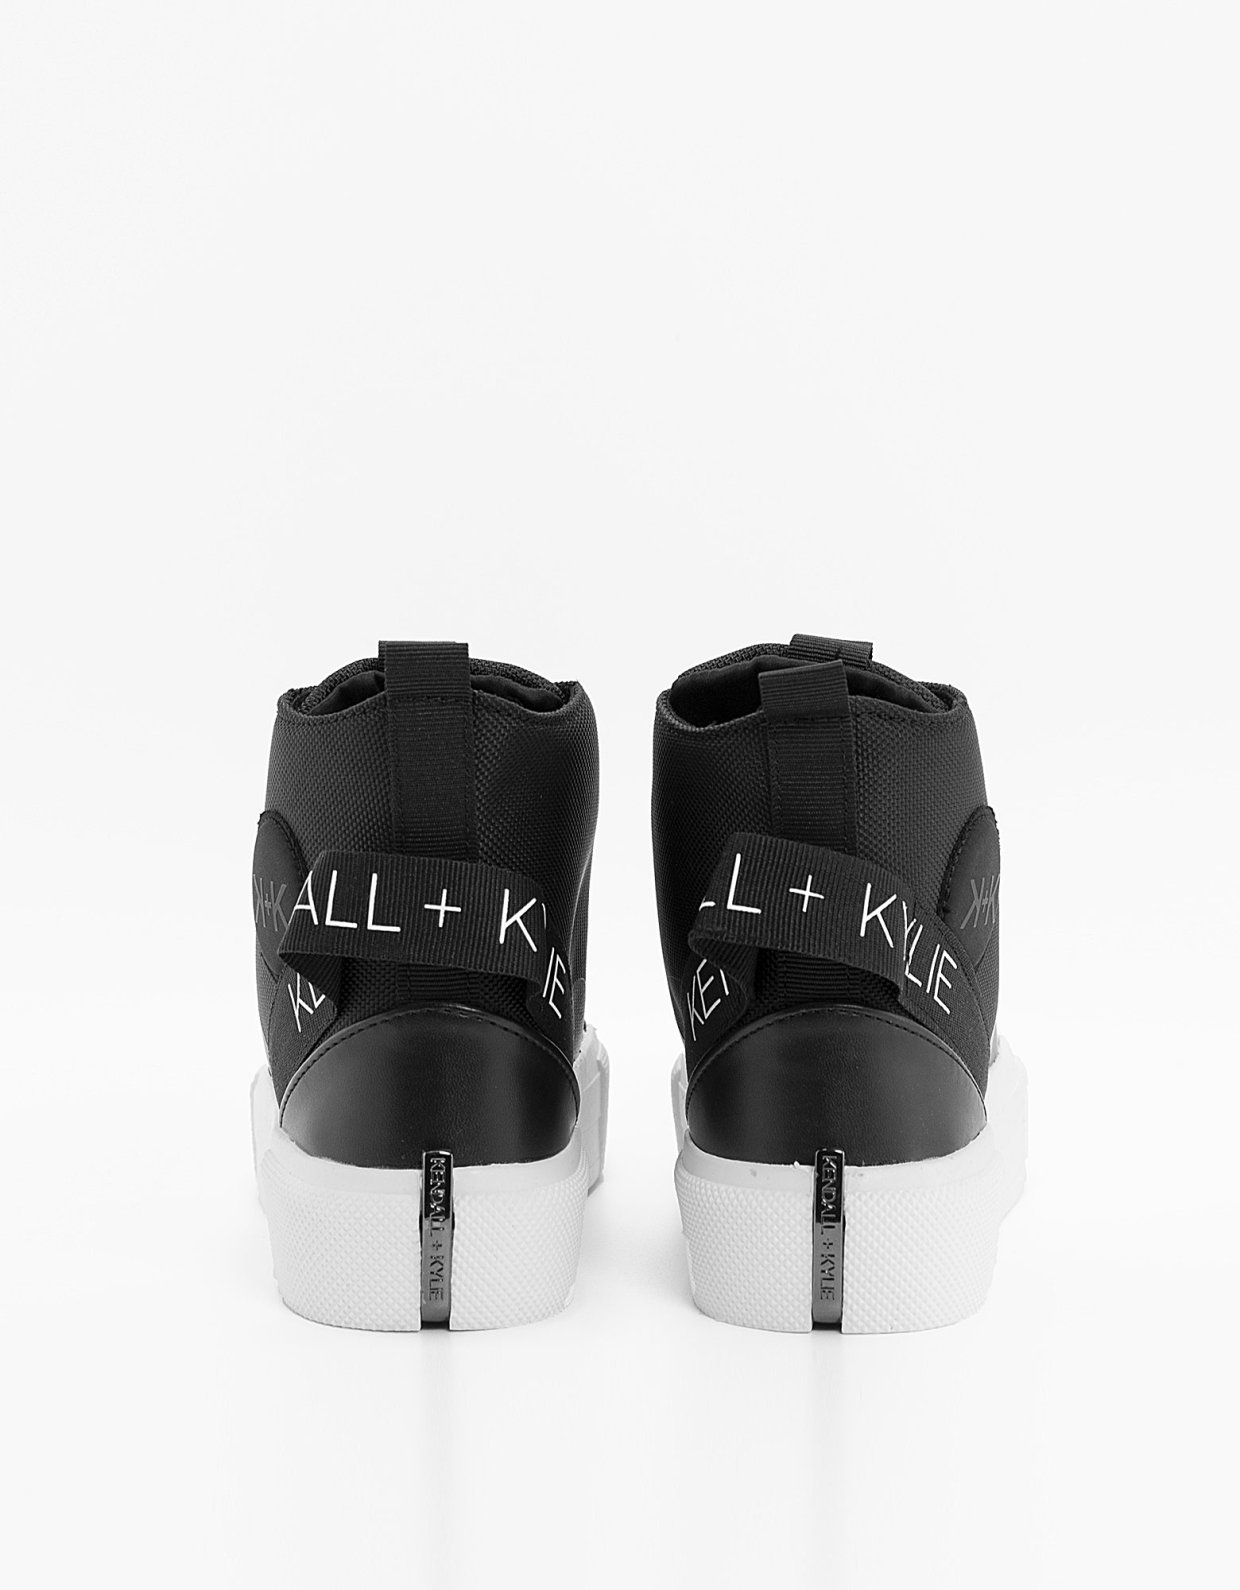 Kendall + Kylie Tamar shoes black